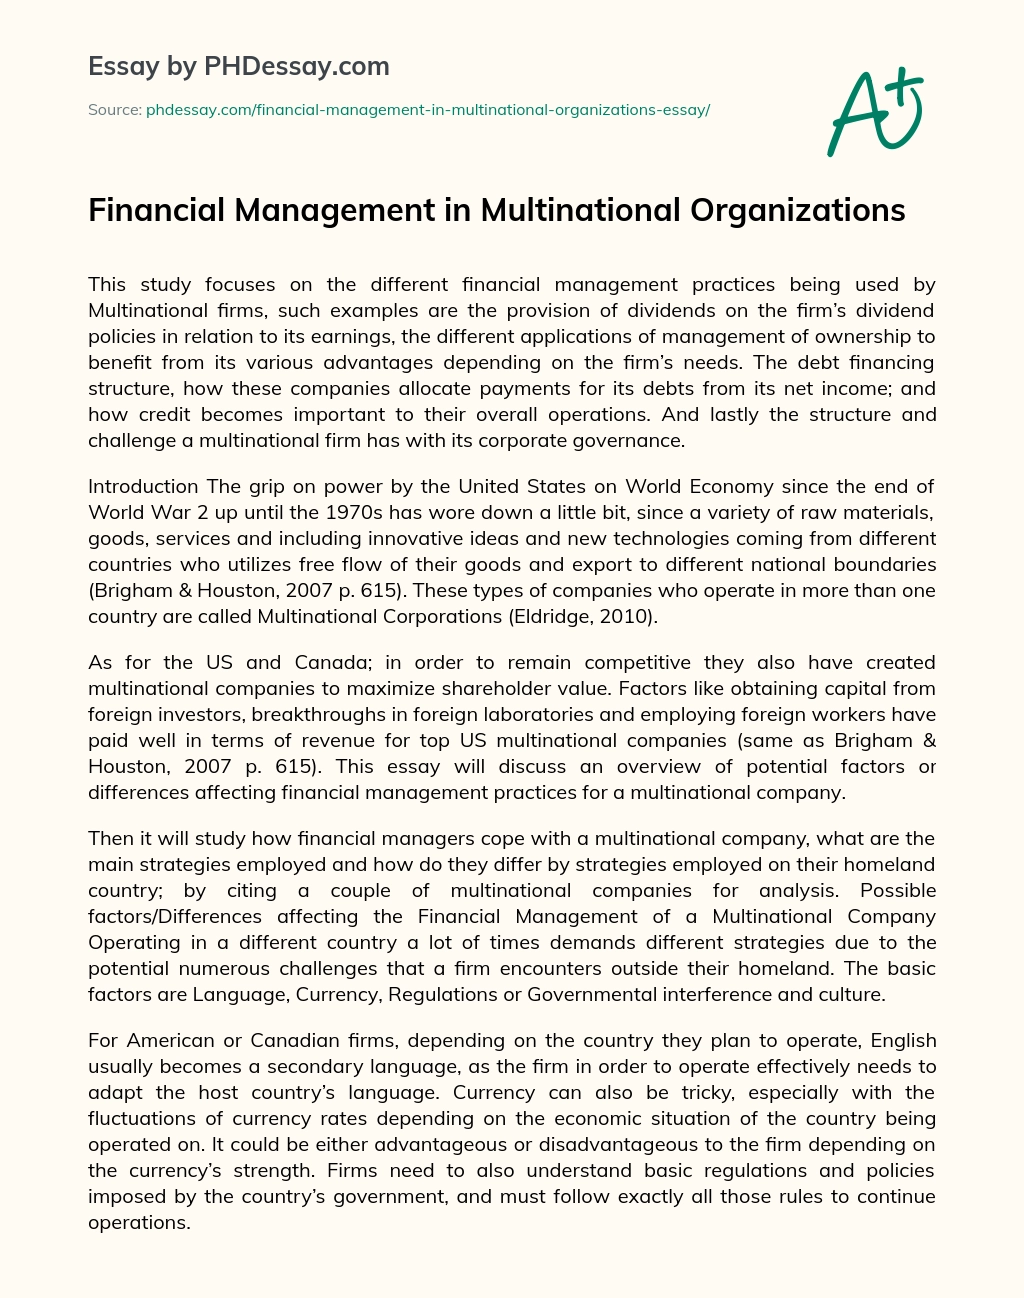 Financial Management in Multinational Organizations essay